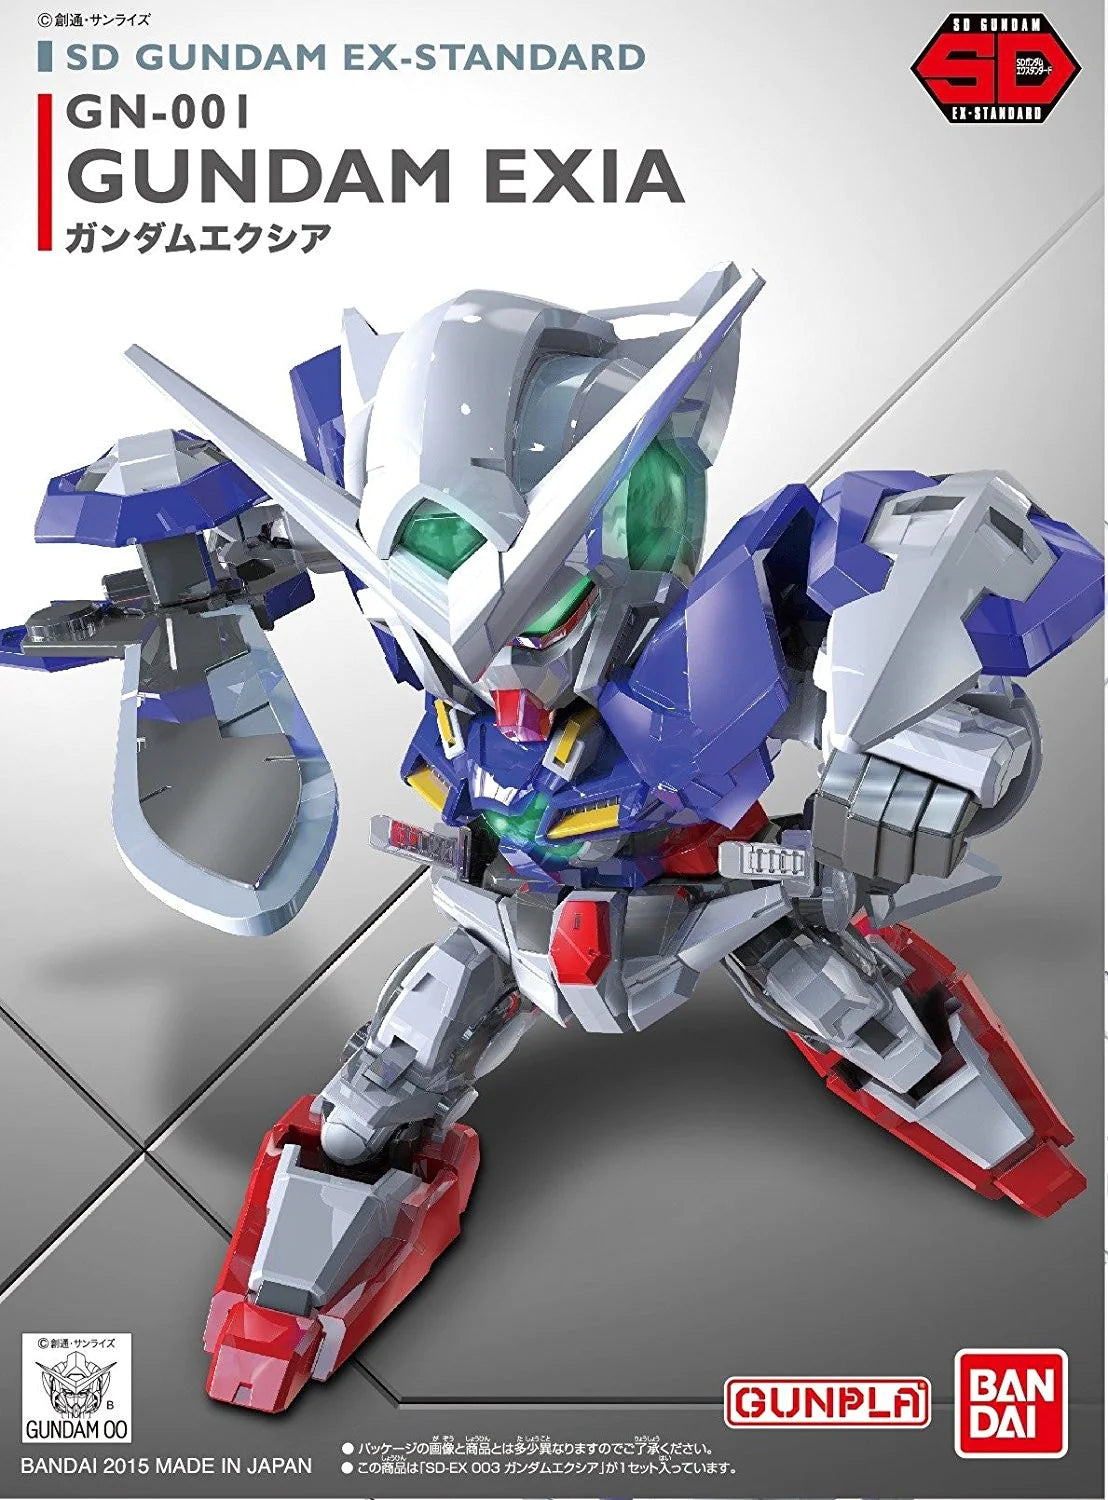 BANDAI 5057599 003 Gundam Exia "Gundam 00", Bandai SD EX-Standard